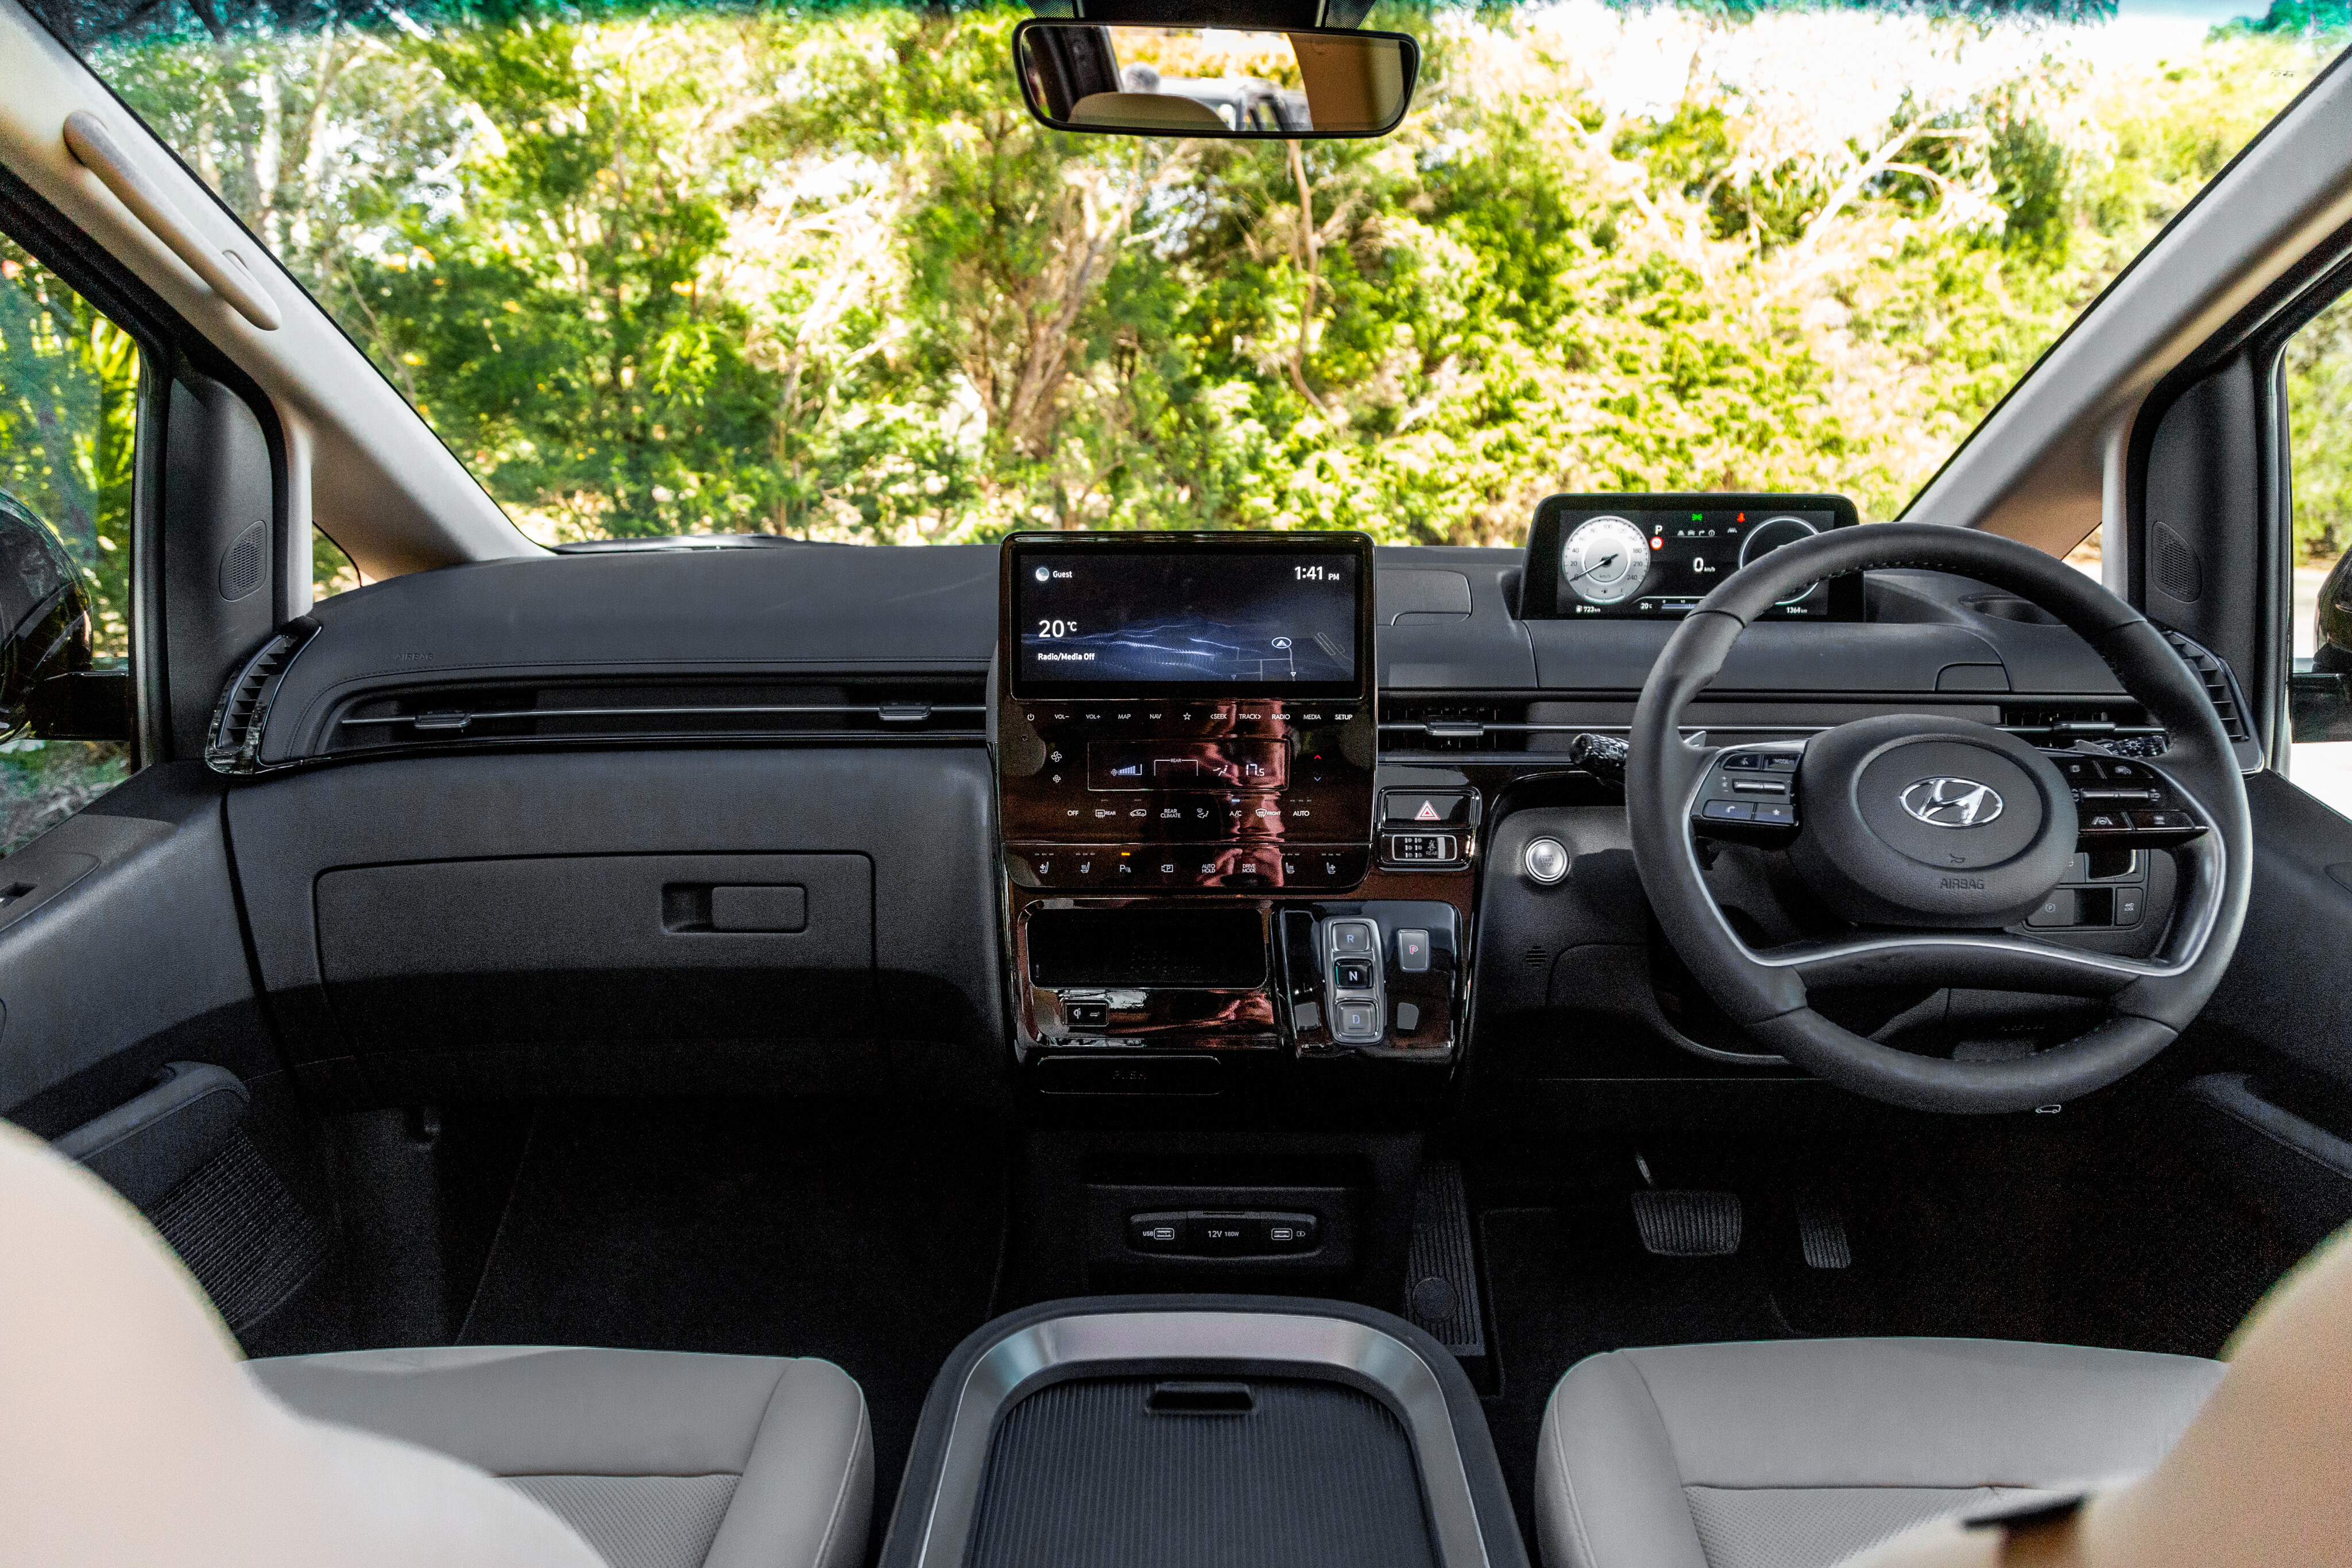 b9a80a23304/2021 hyundai staria highlander diesel interior dashboard jpg